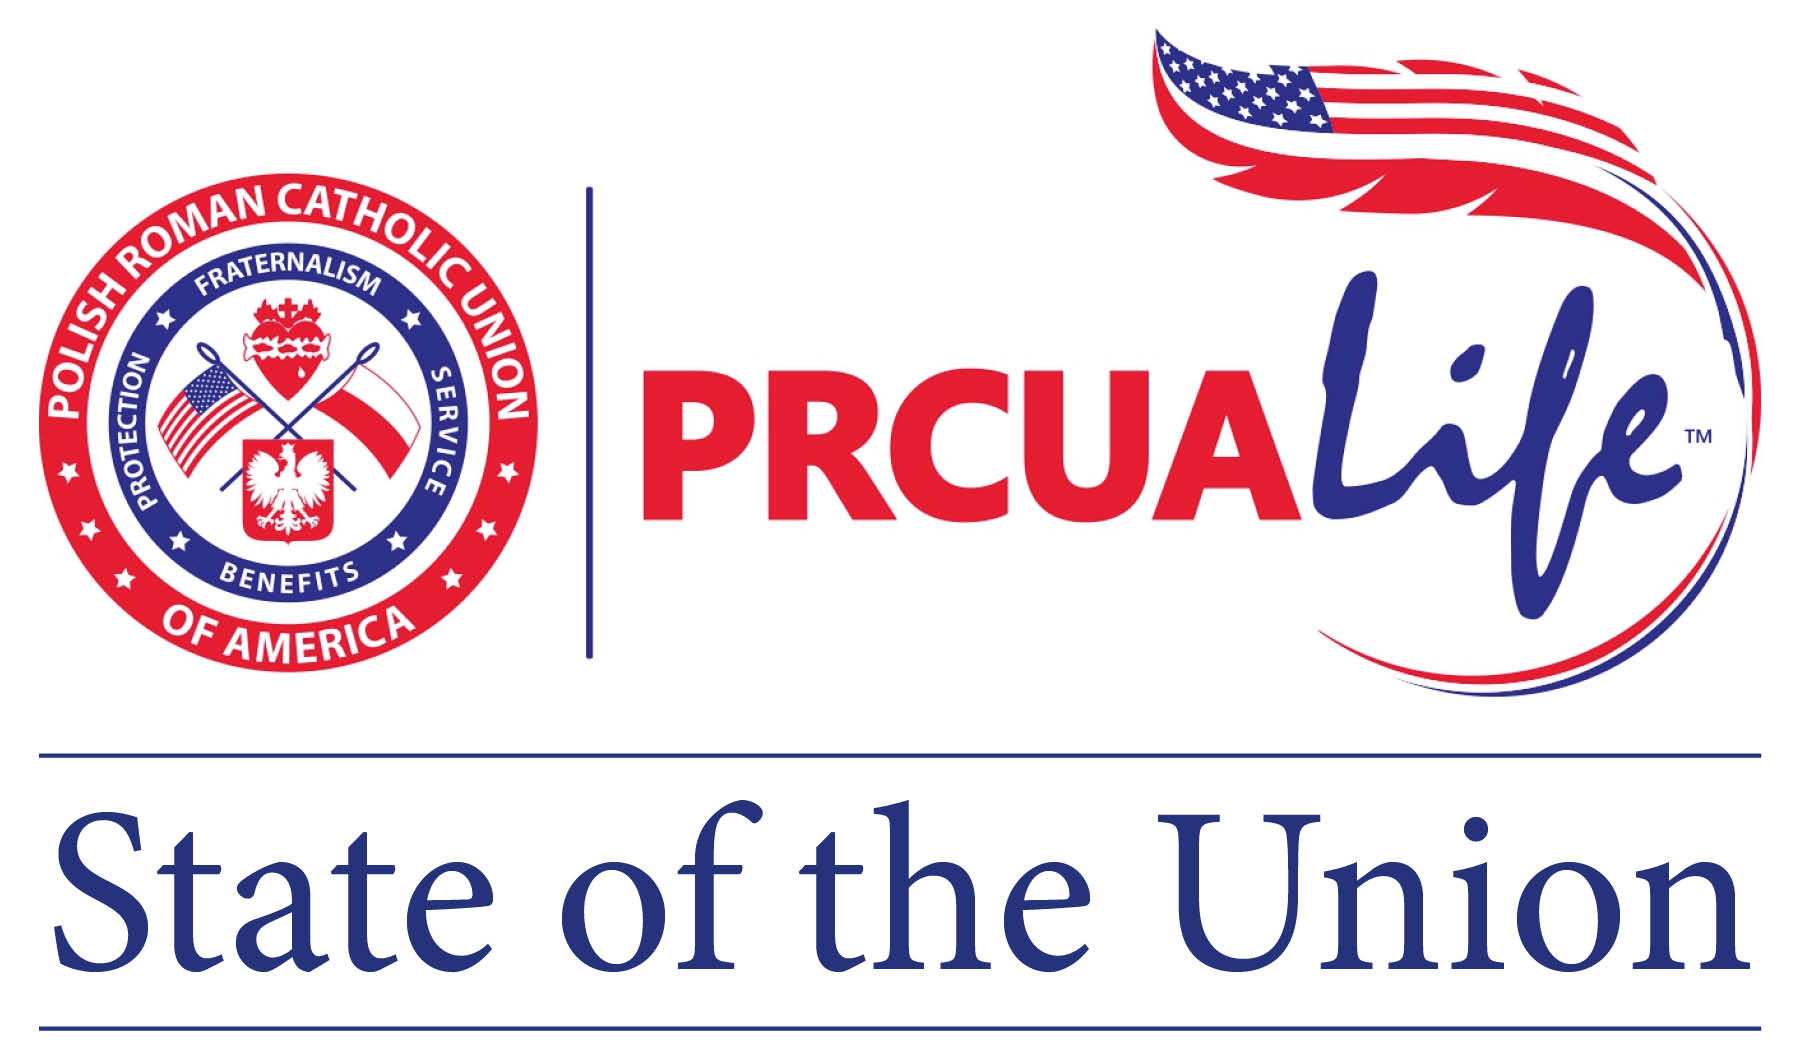 PRCUA ANNUAL STATE OF THE UNION